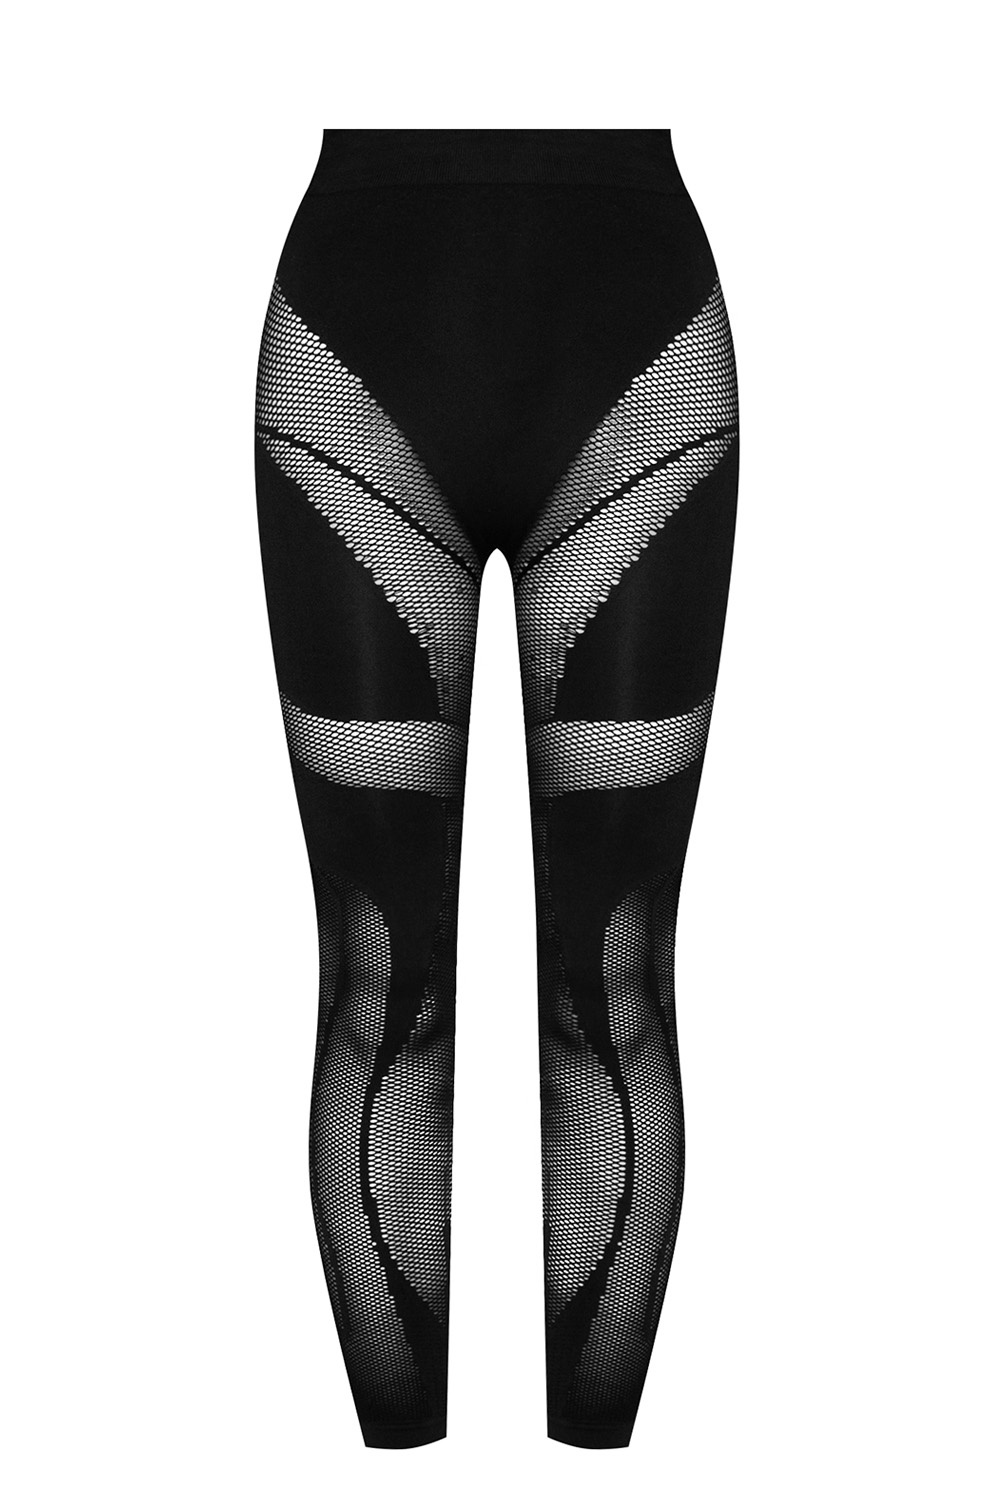 Nike Sportswear Leggings Ragazza, Nero (Black/White), S 